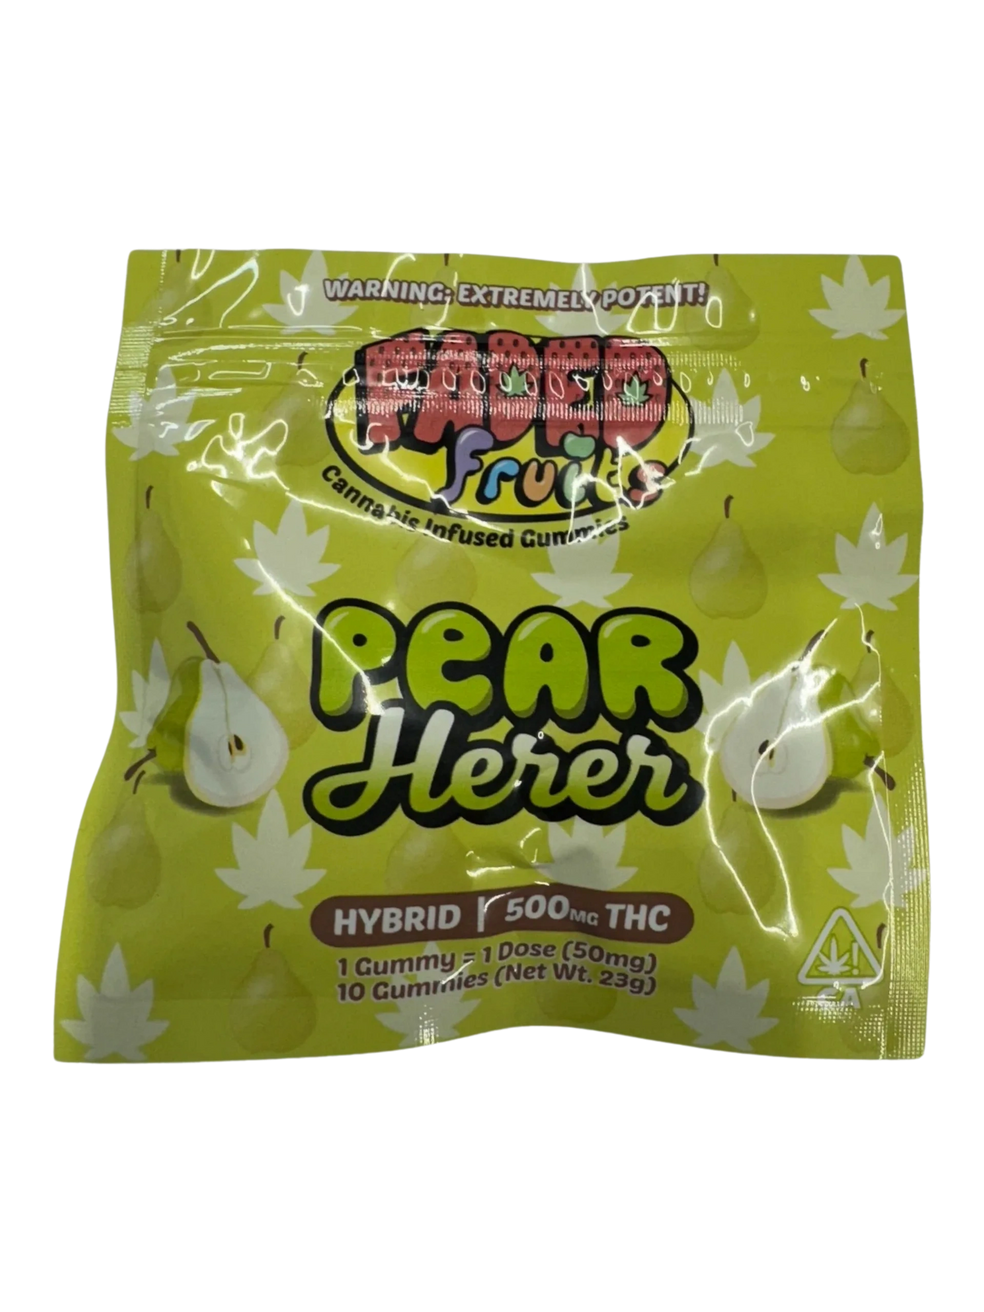 Faded Fruit Gummies (500mg) | Hybrid | Pear Herer